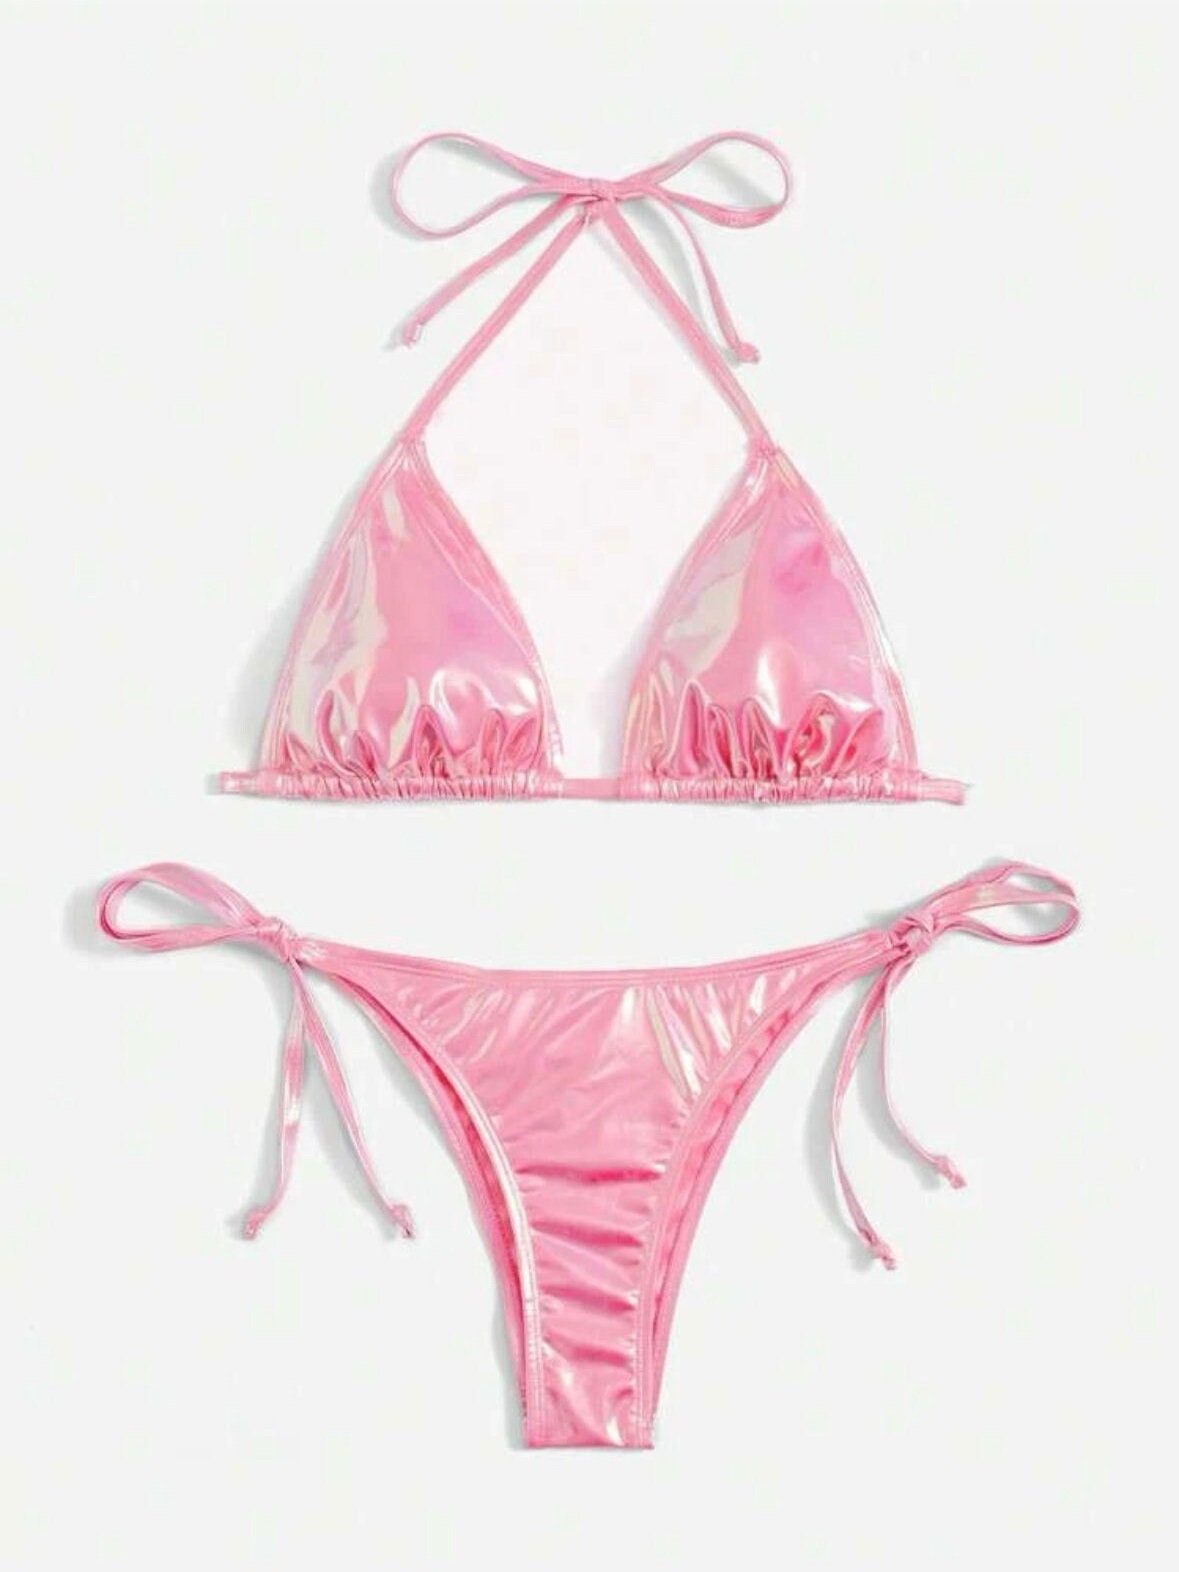 The Brianna Pink Metallic Bikini Set Halter Triangle Bra Top & Tie Side Bikini Bottom 2 Piece Bathing Suit